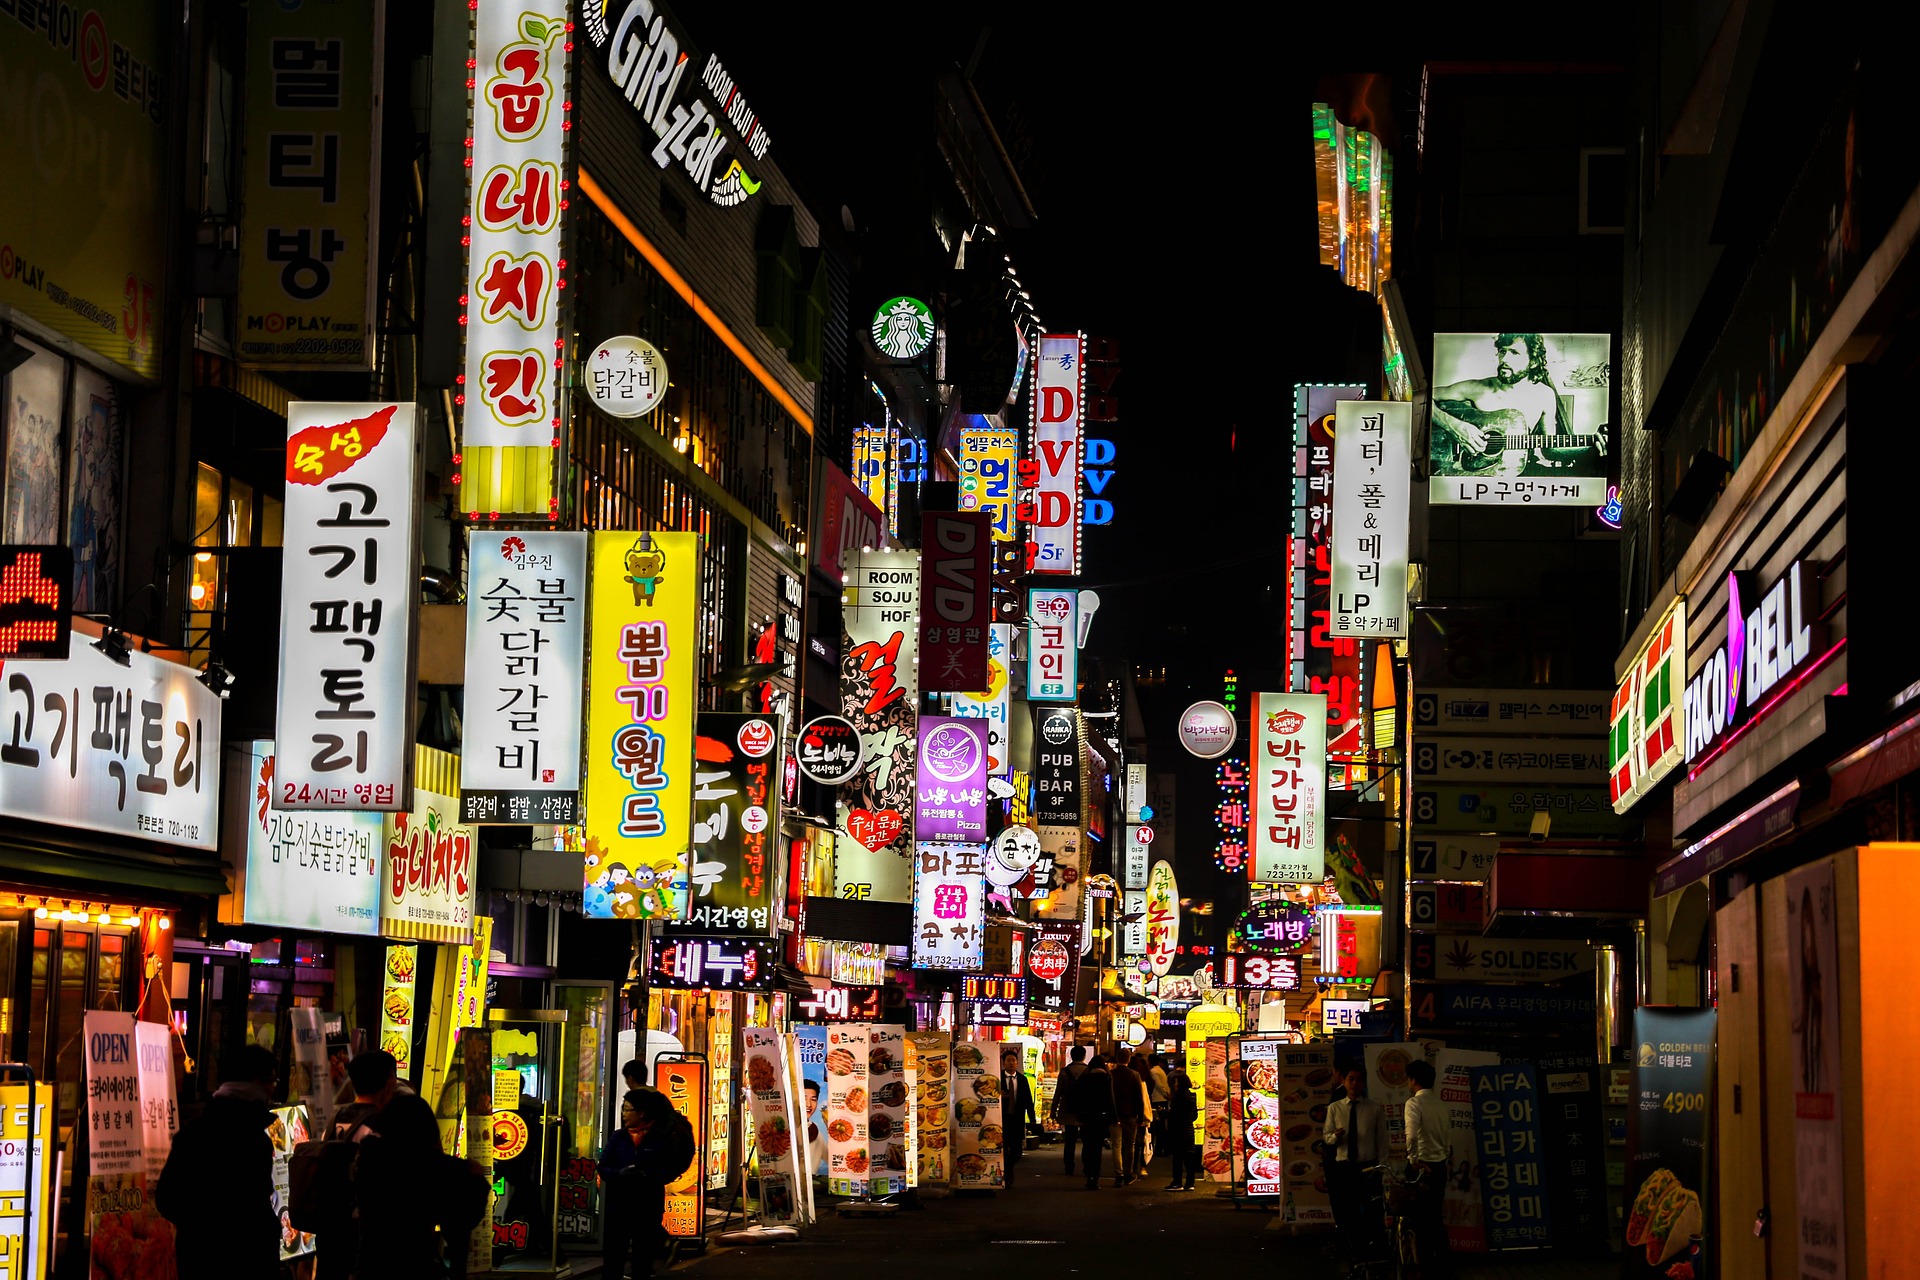 Seoul street at night